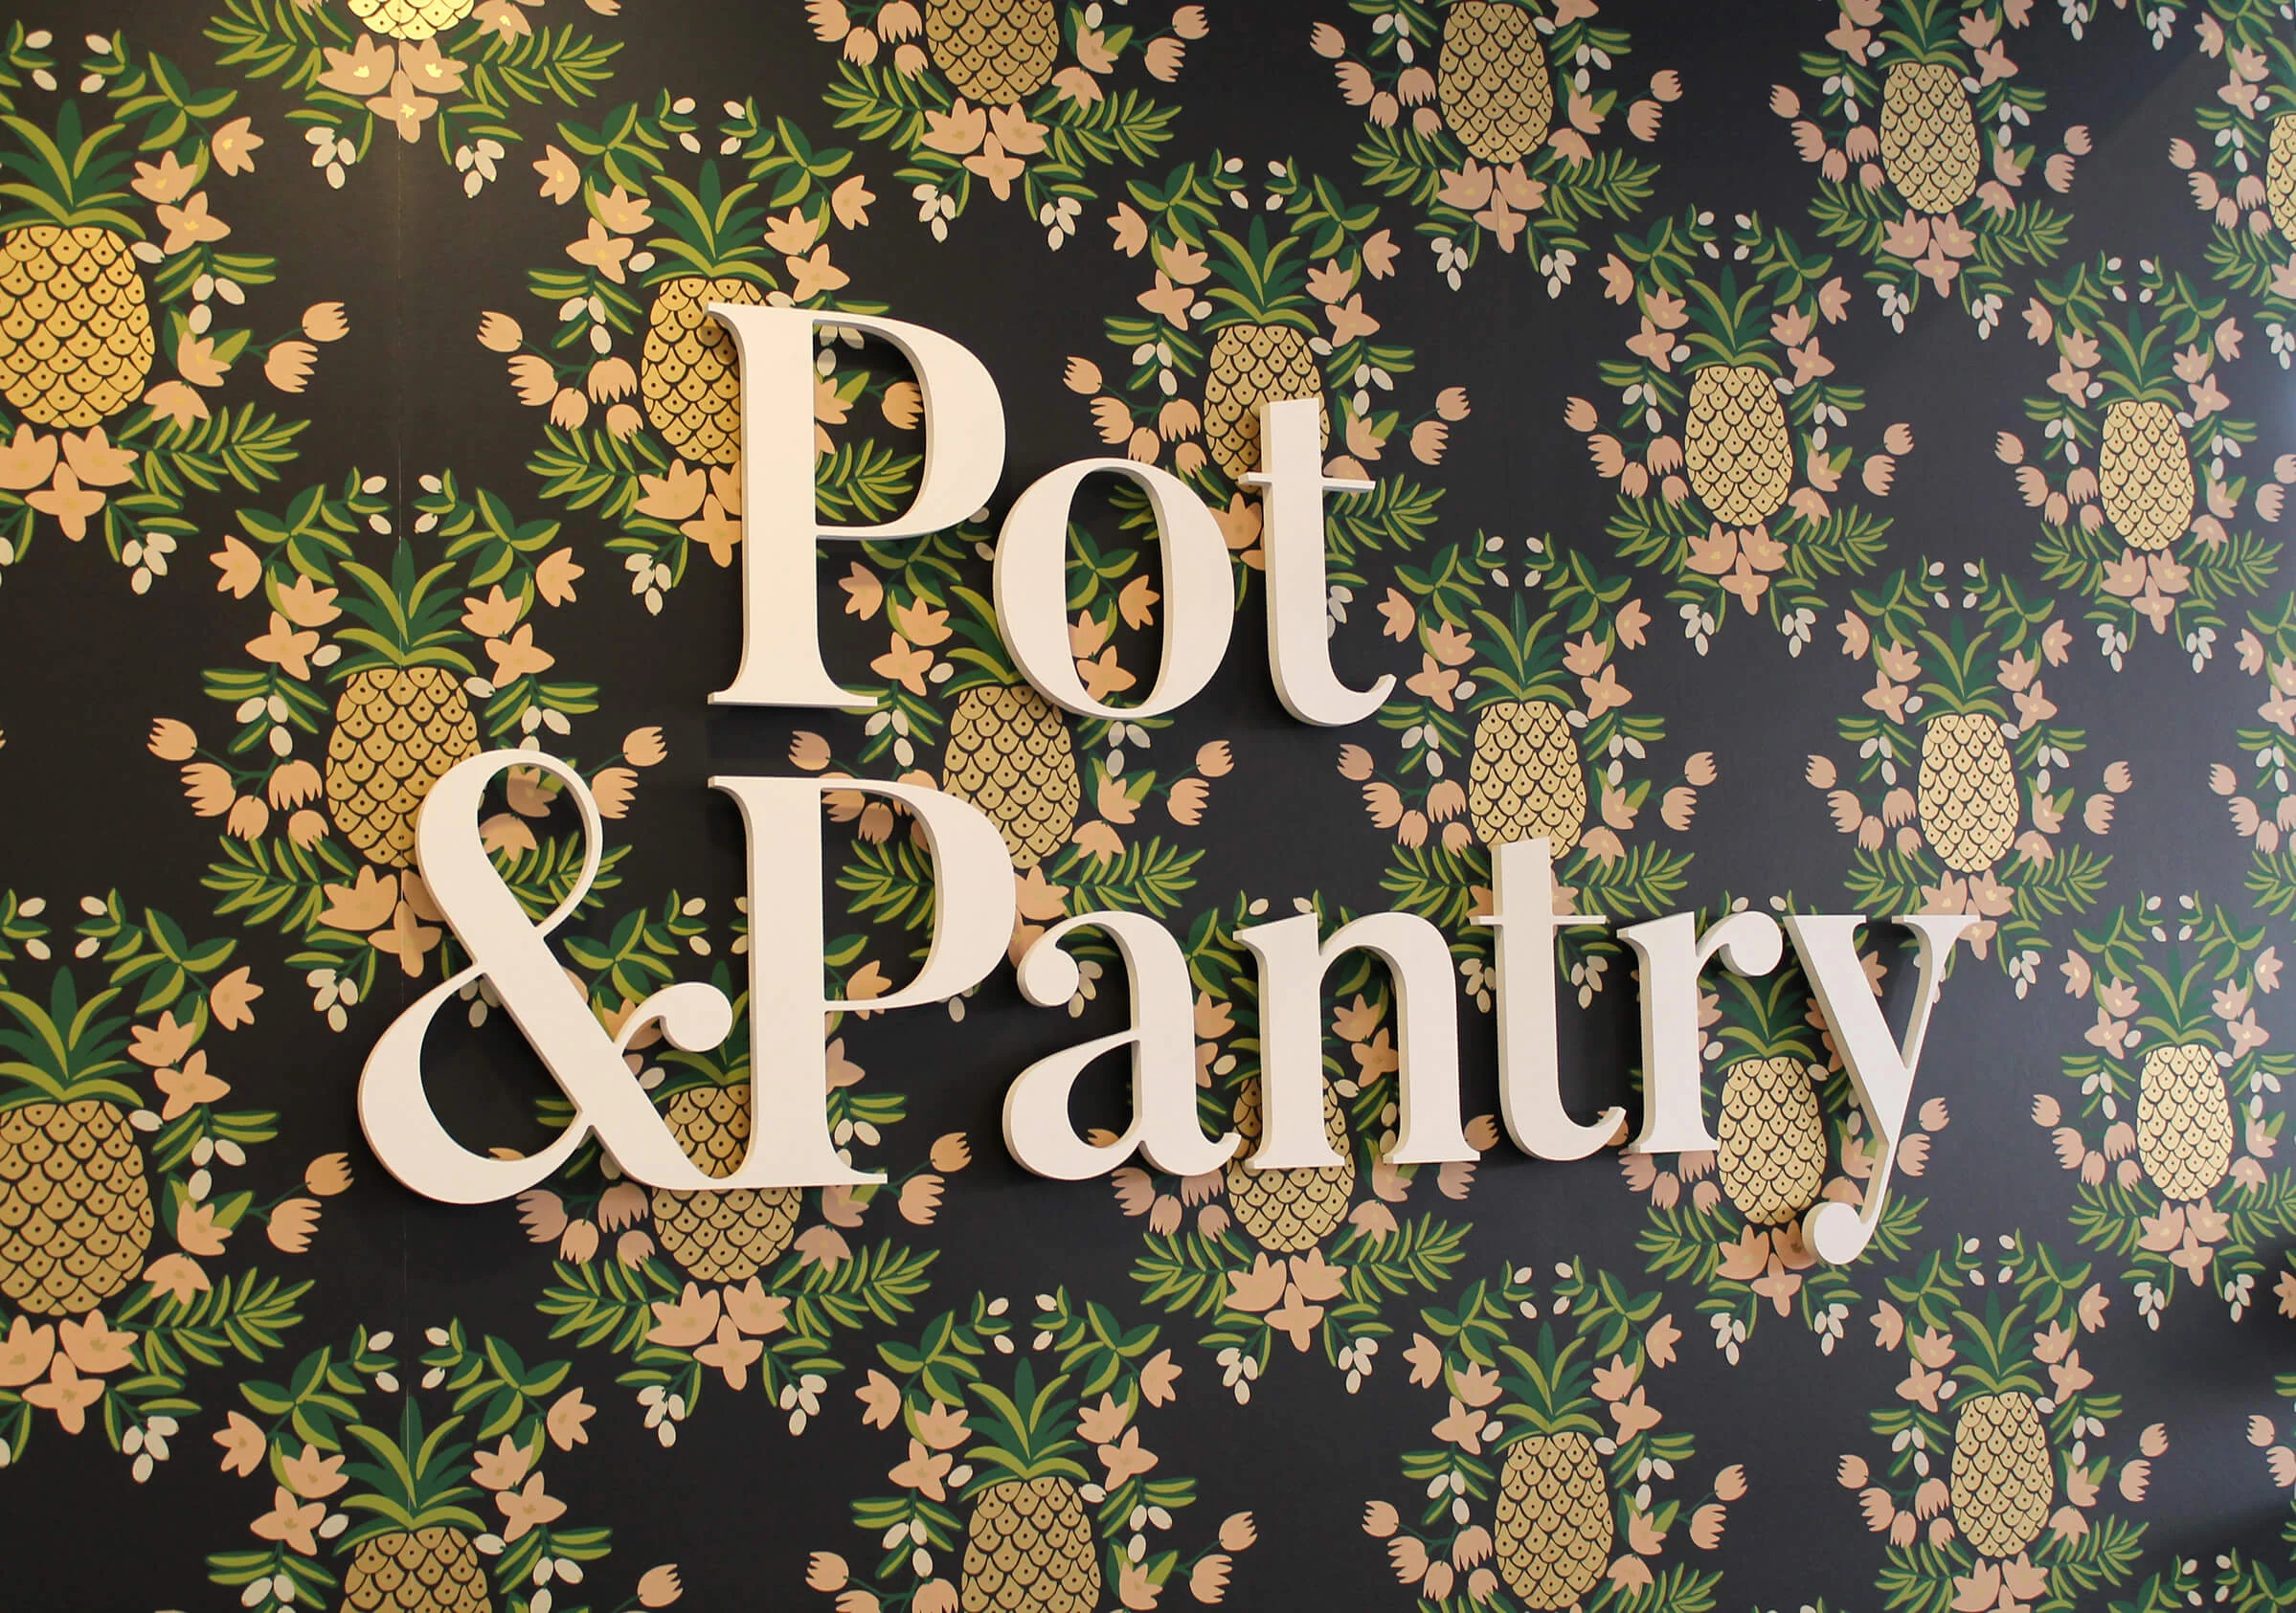 Pot&Pantry Indoor Signage by Ottawa Graphic Designer idApostle